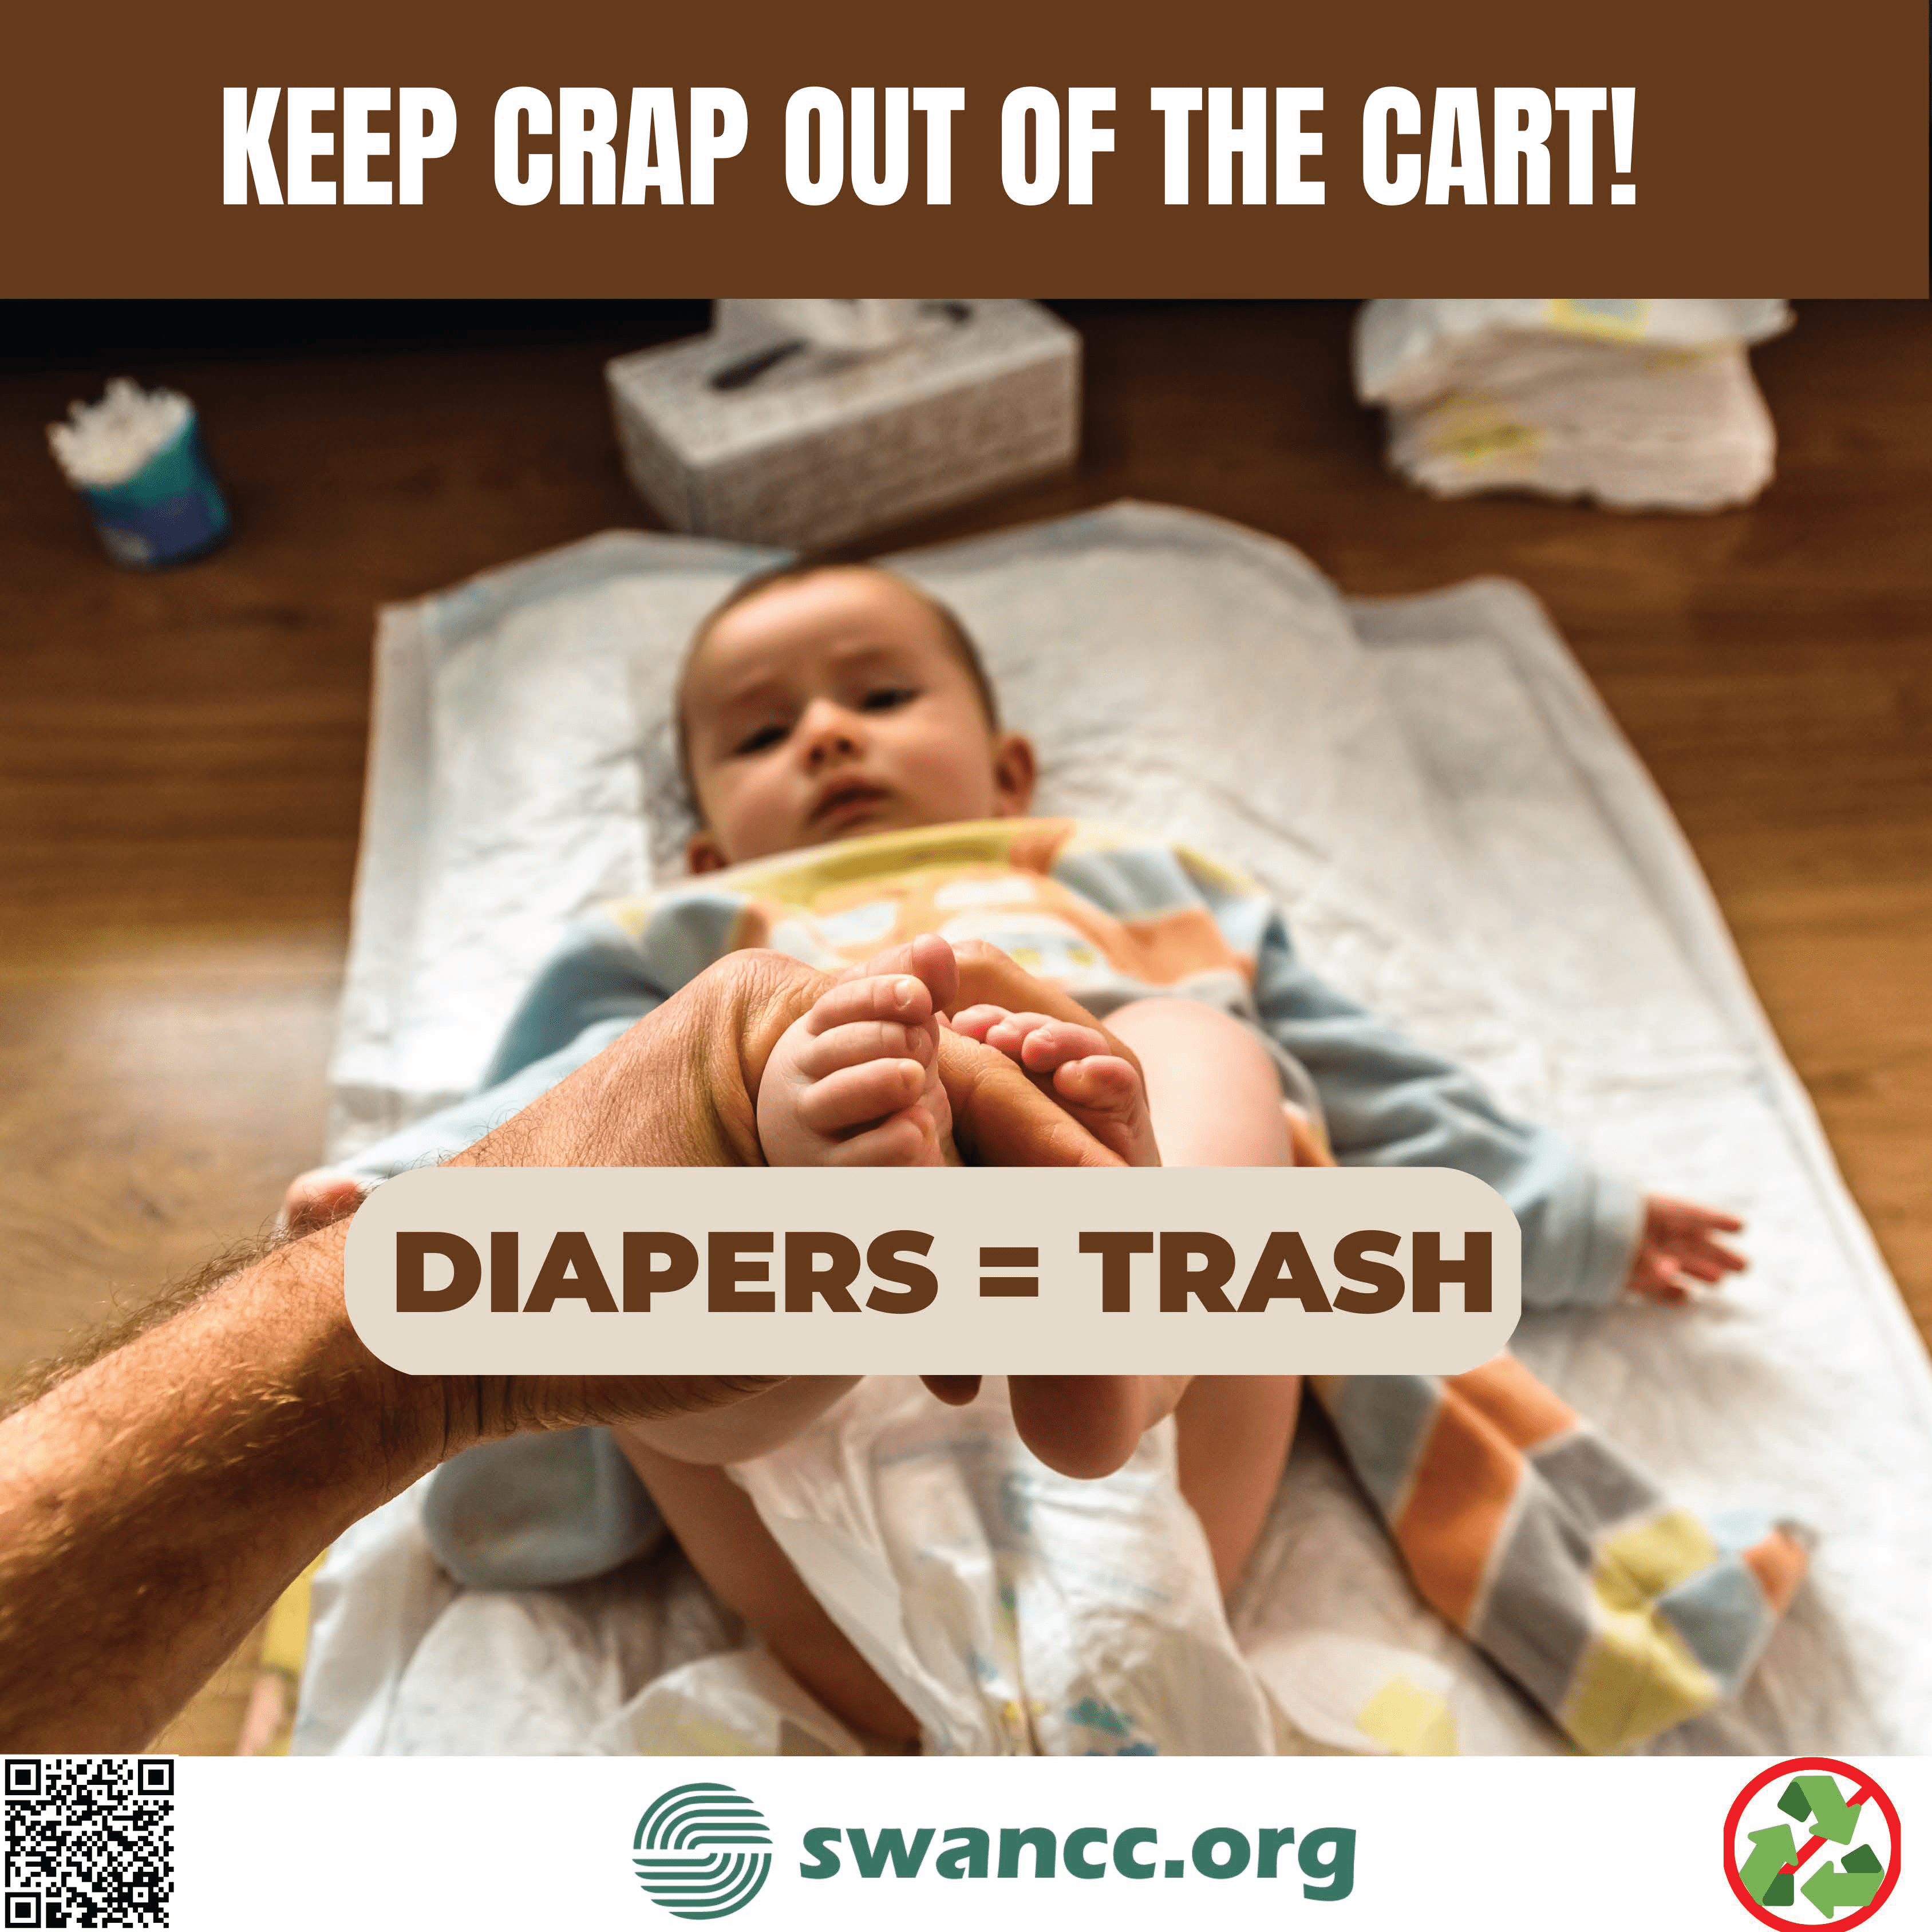 Diapers = Trash